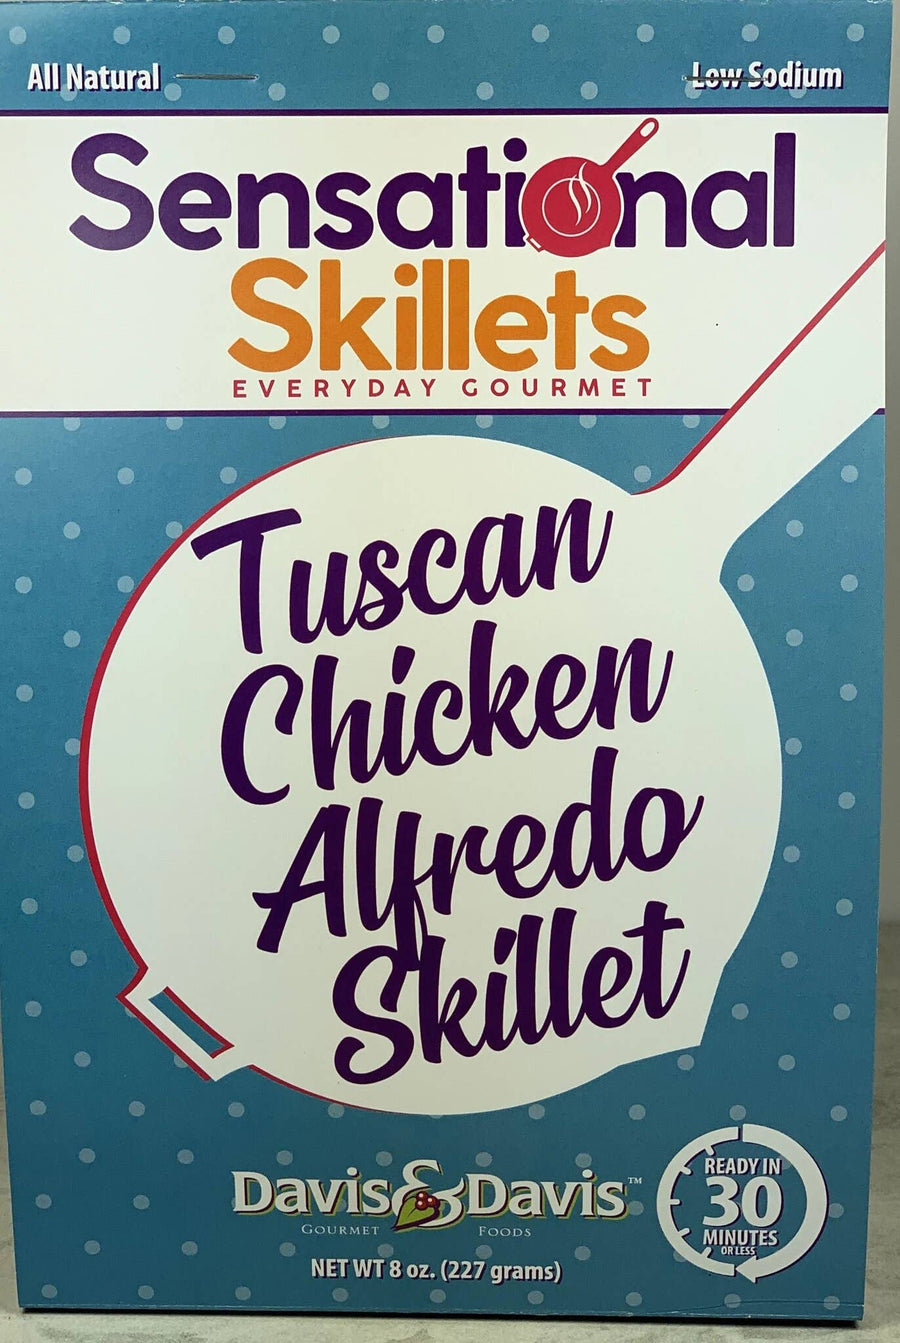 Tuscan Chicken Alfredo